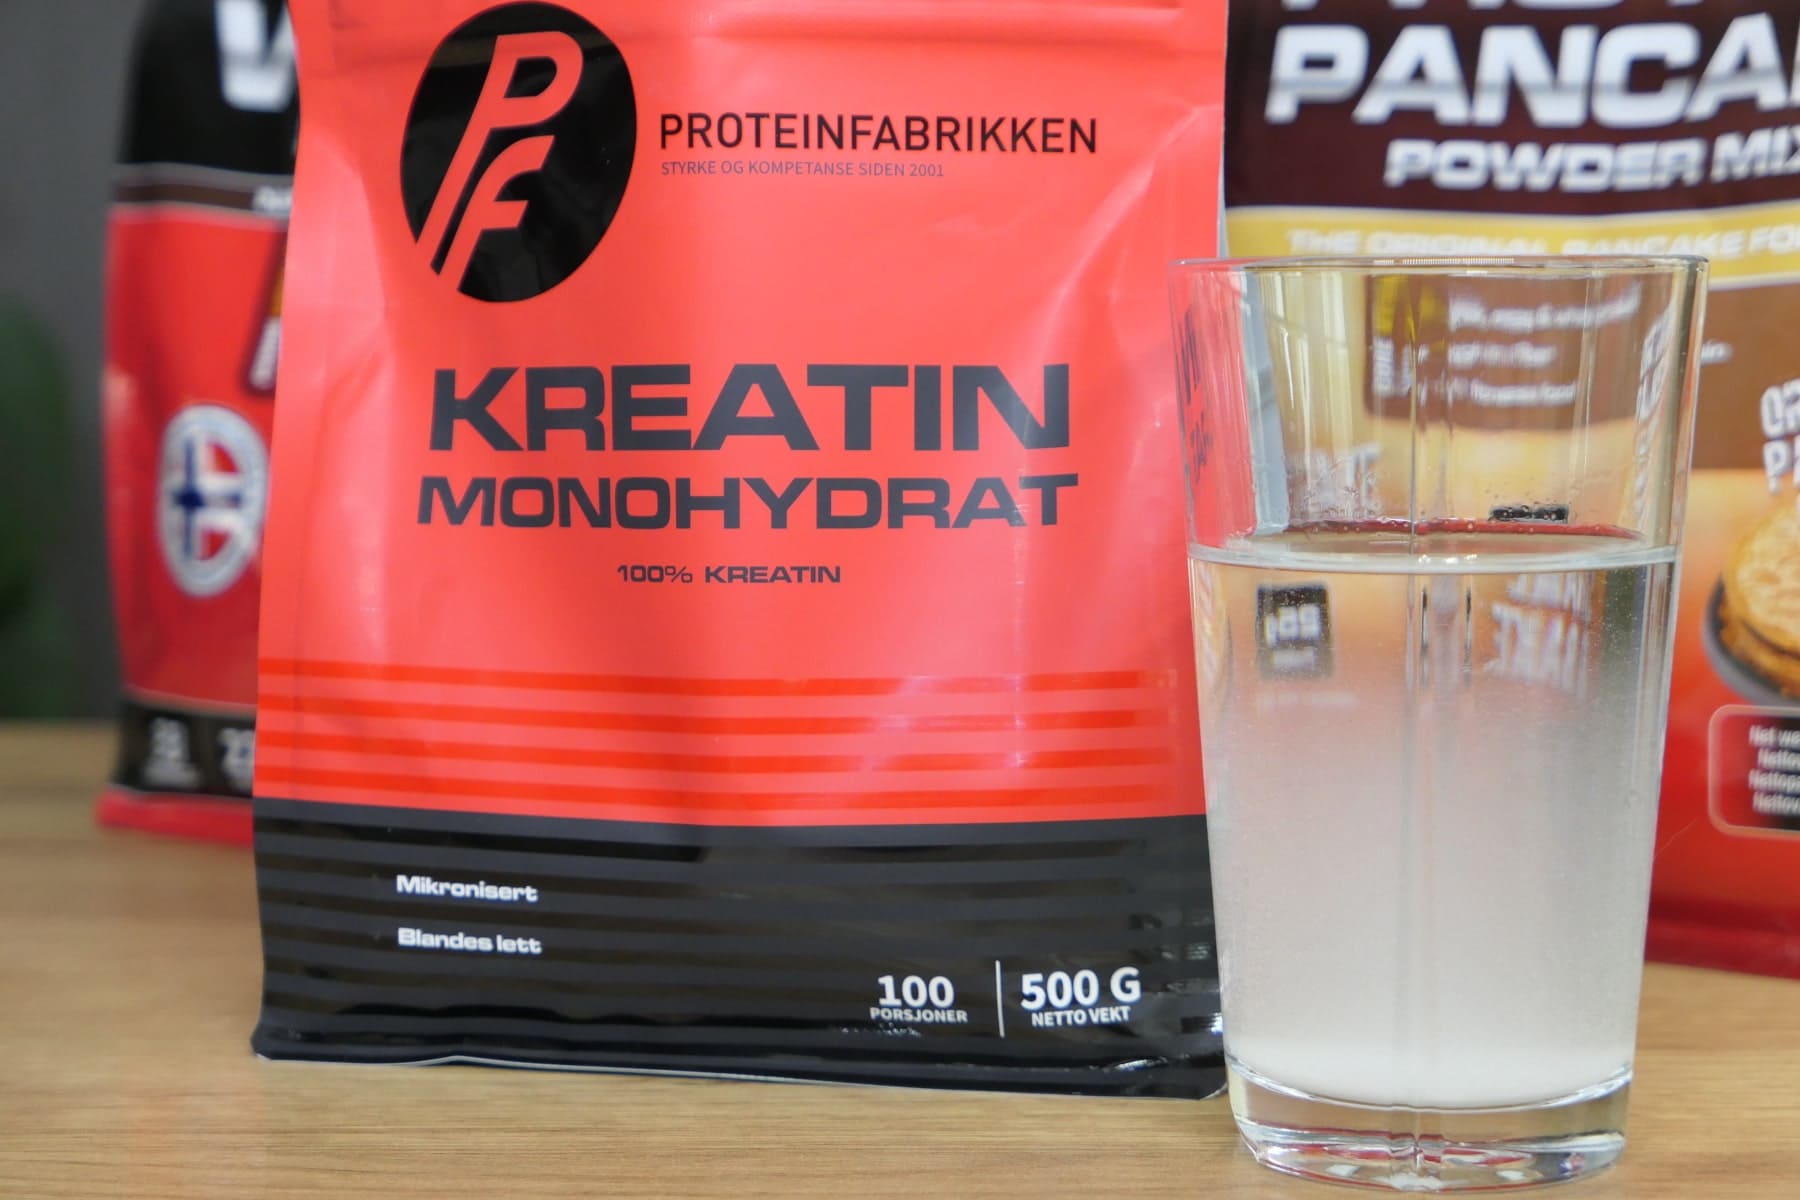 Kreatin monohydrat proteinfabrikken blandet